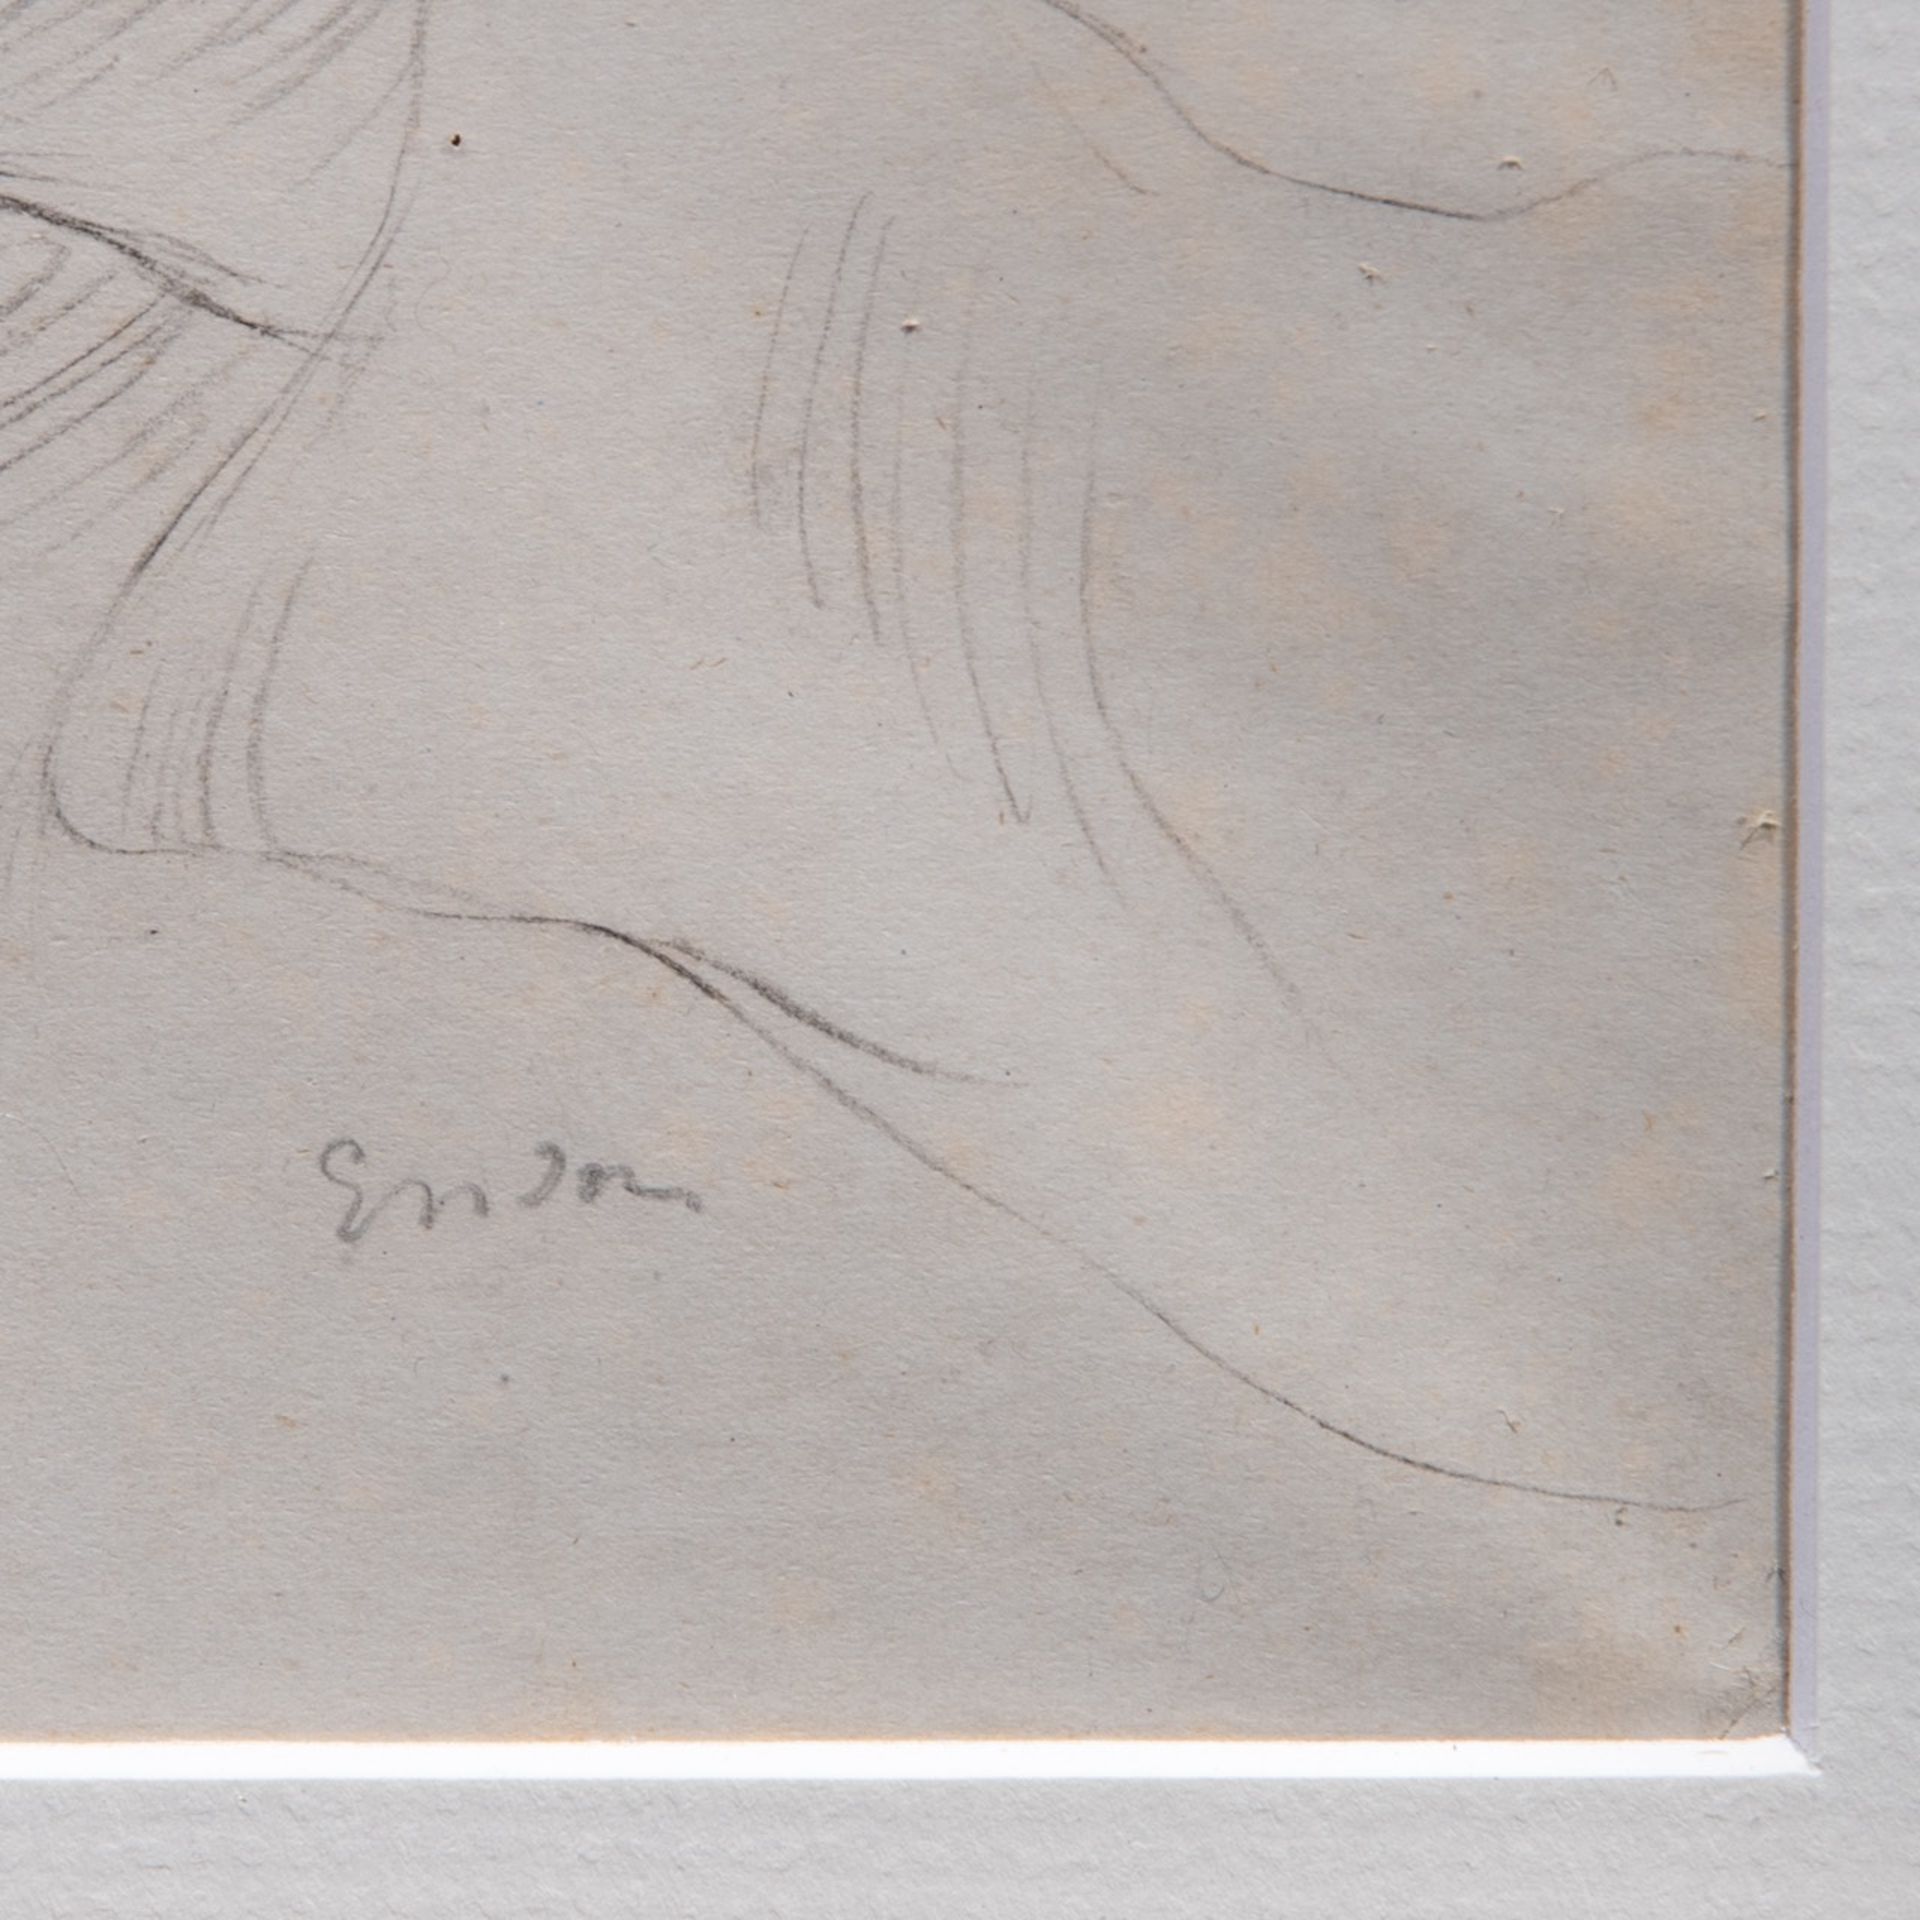 James Ensor (1860-1949), hands at work, pencil drawing on paper 16.5 x 21 cm. (6 1/2 x 8.2 in.), Fra - Bild 4 aus 5